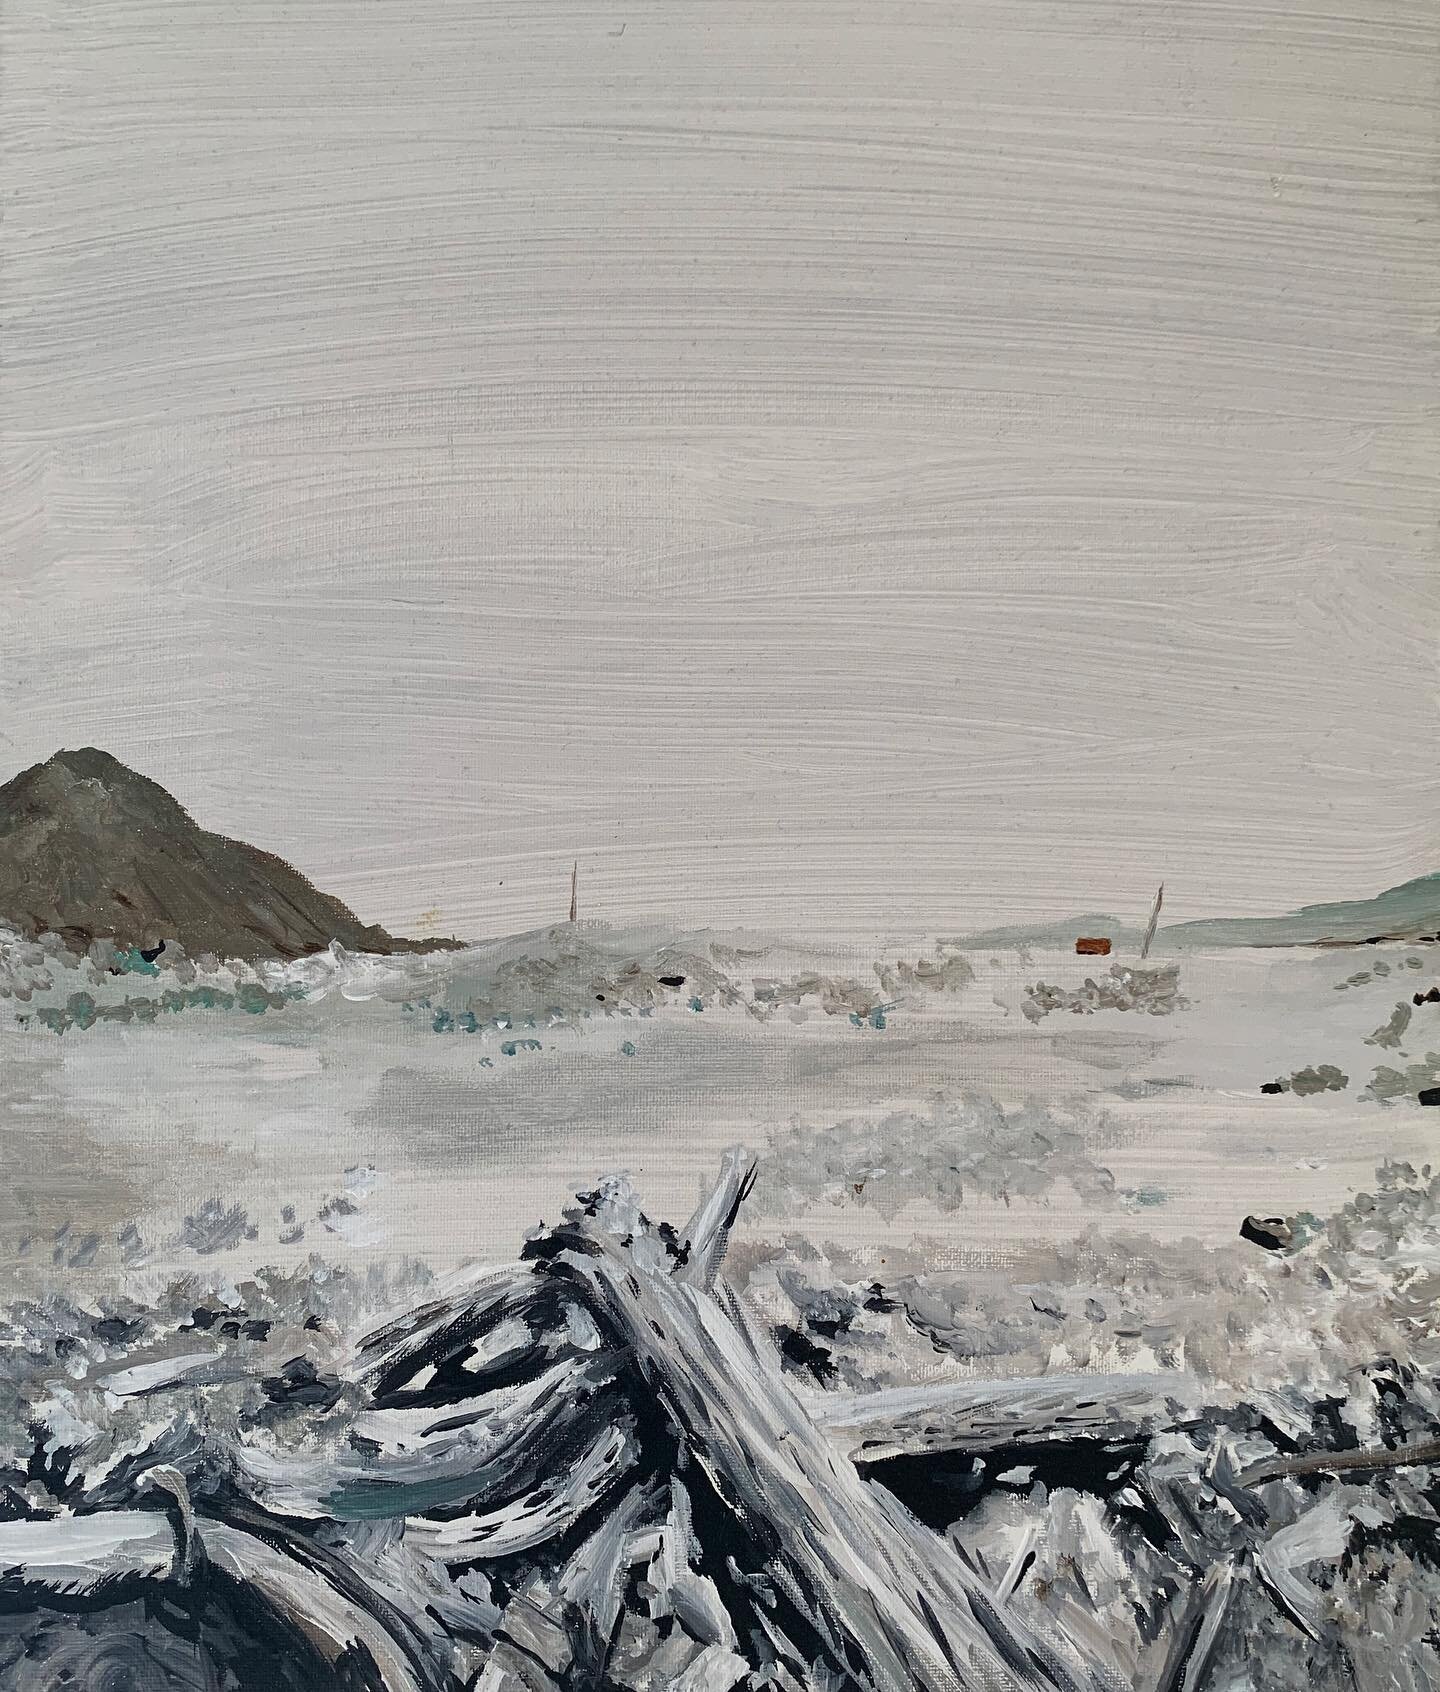 death valley desert. acrylic on canvas, 2012